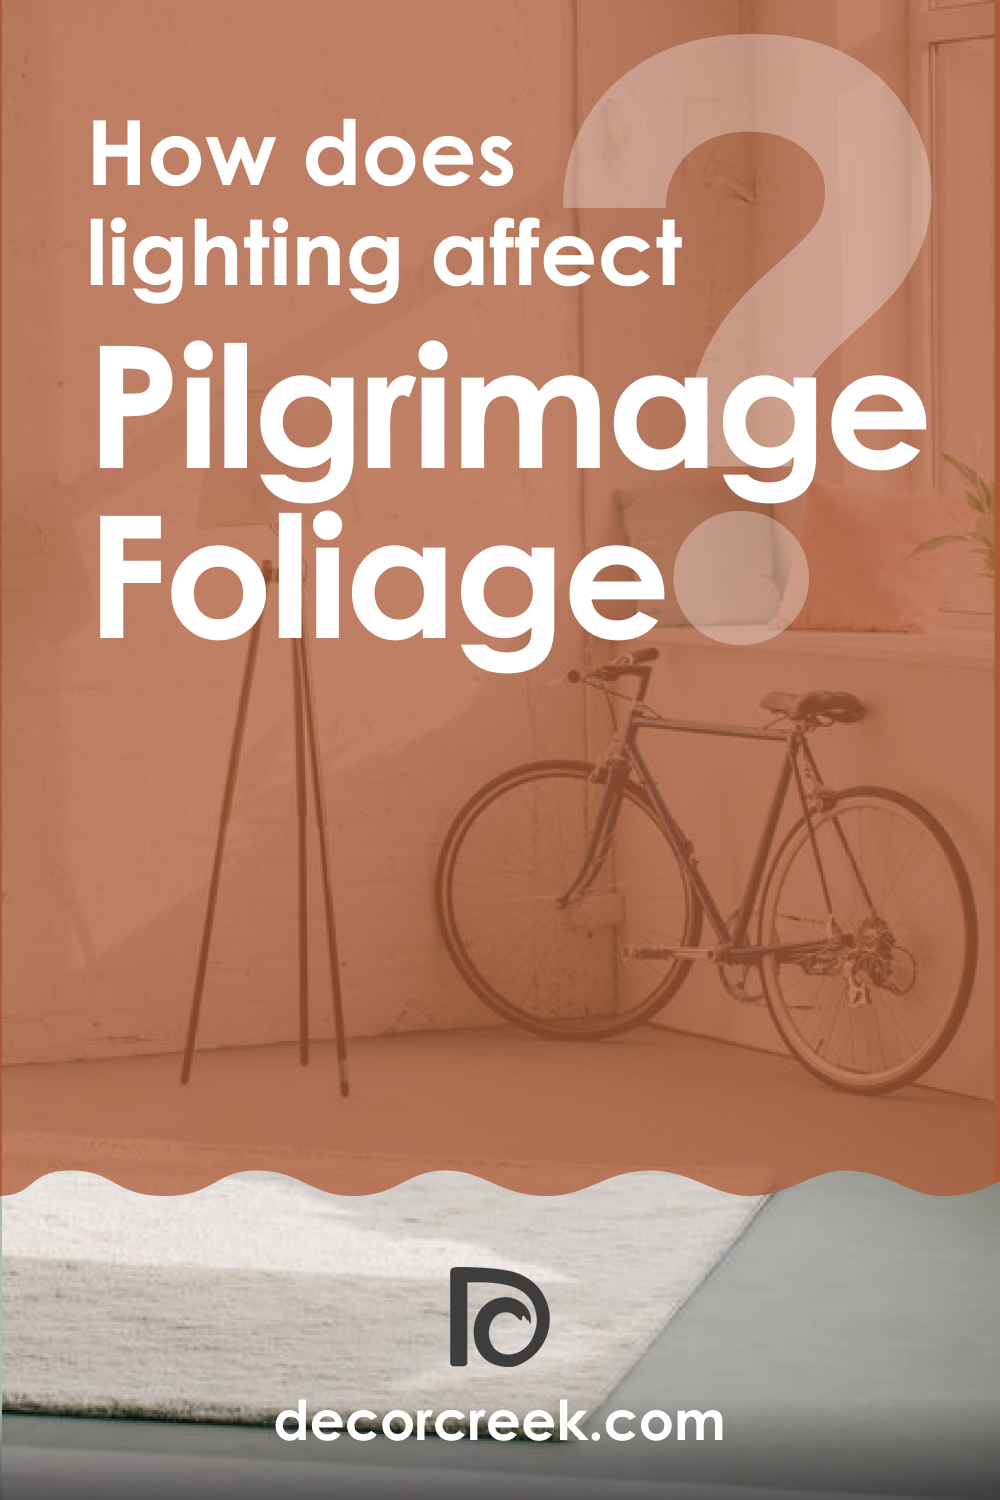 How Does Lighting Affect Pilgrimage Foliage 2175-20?